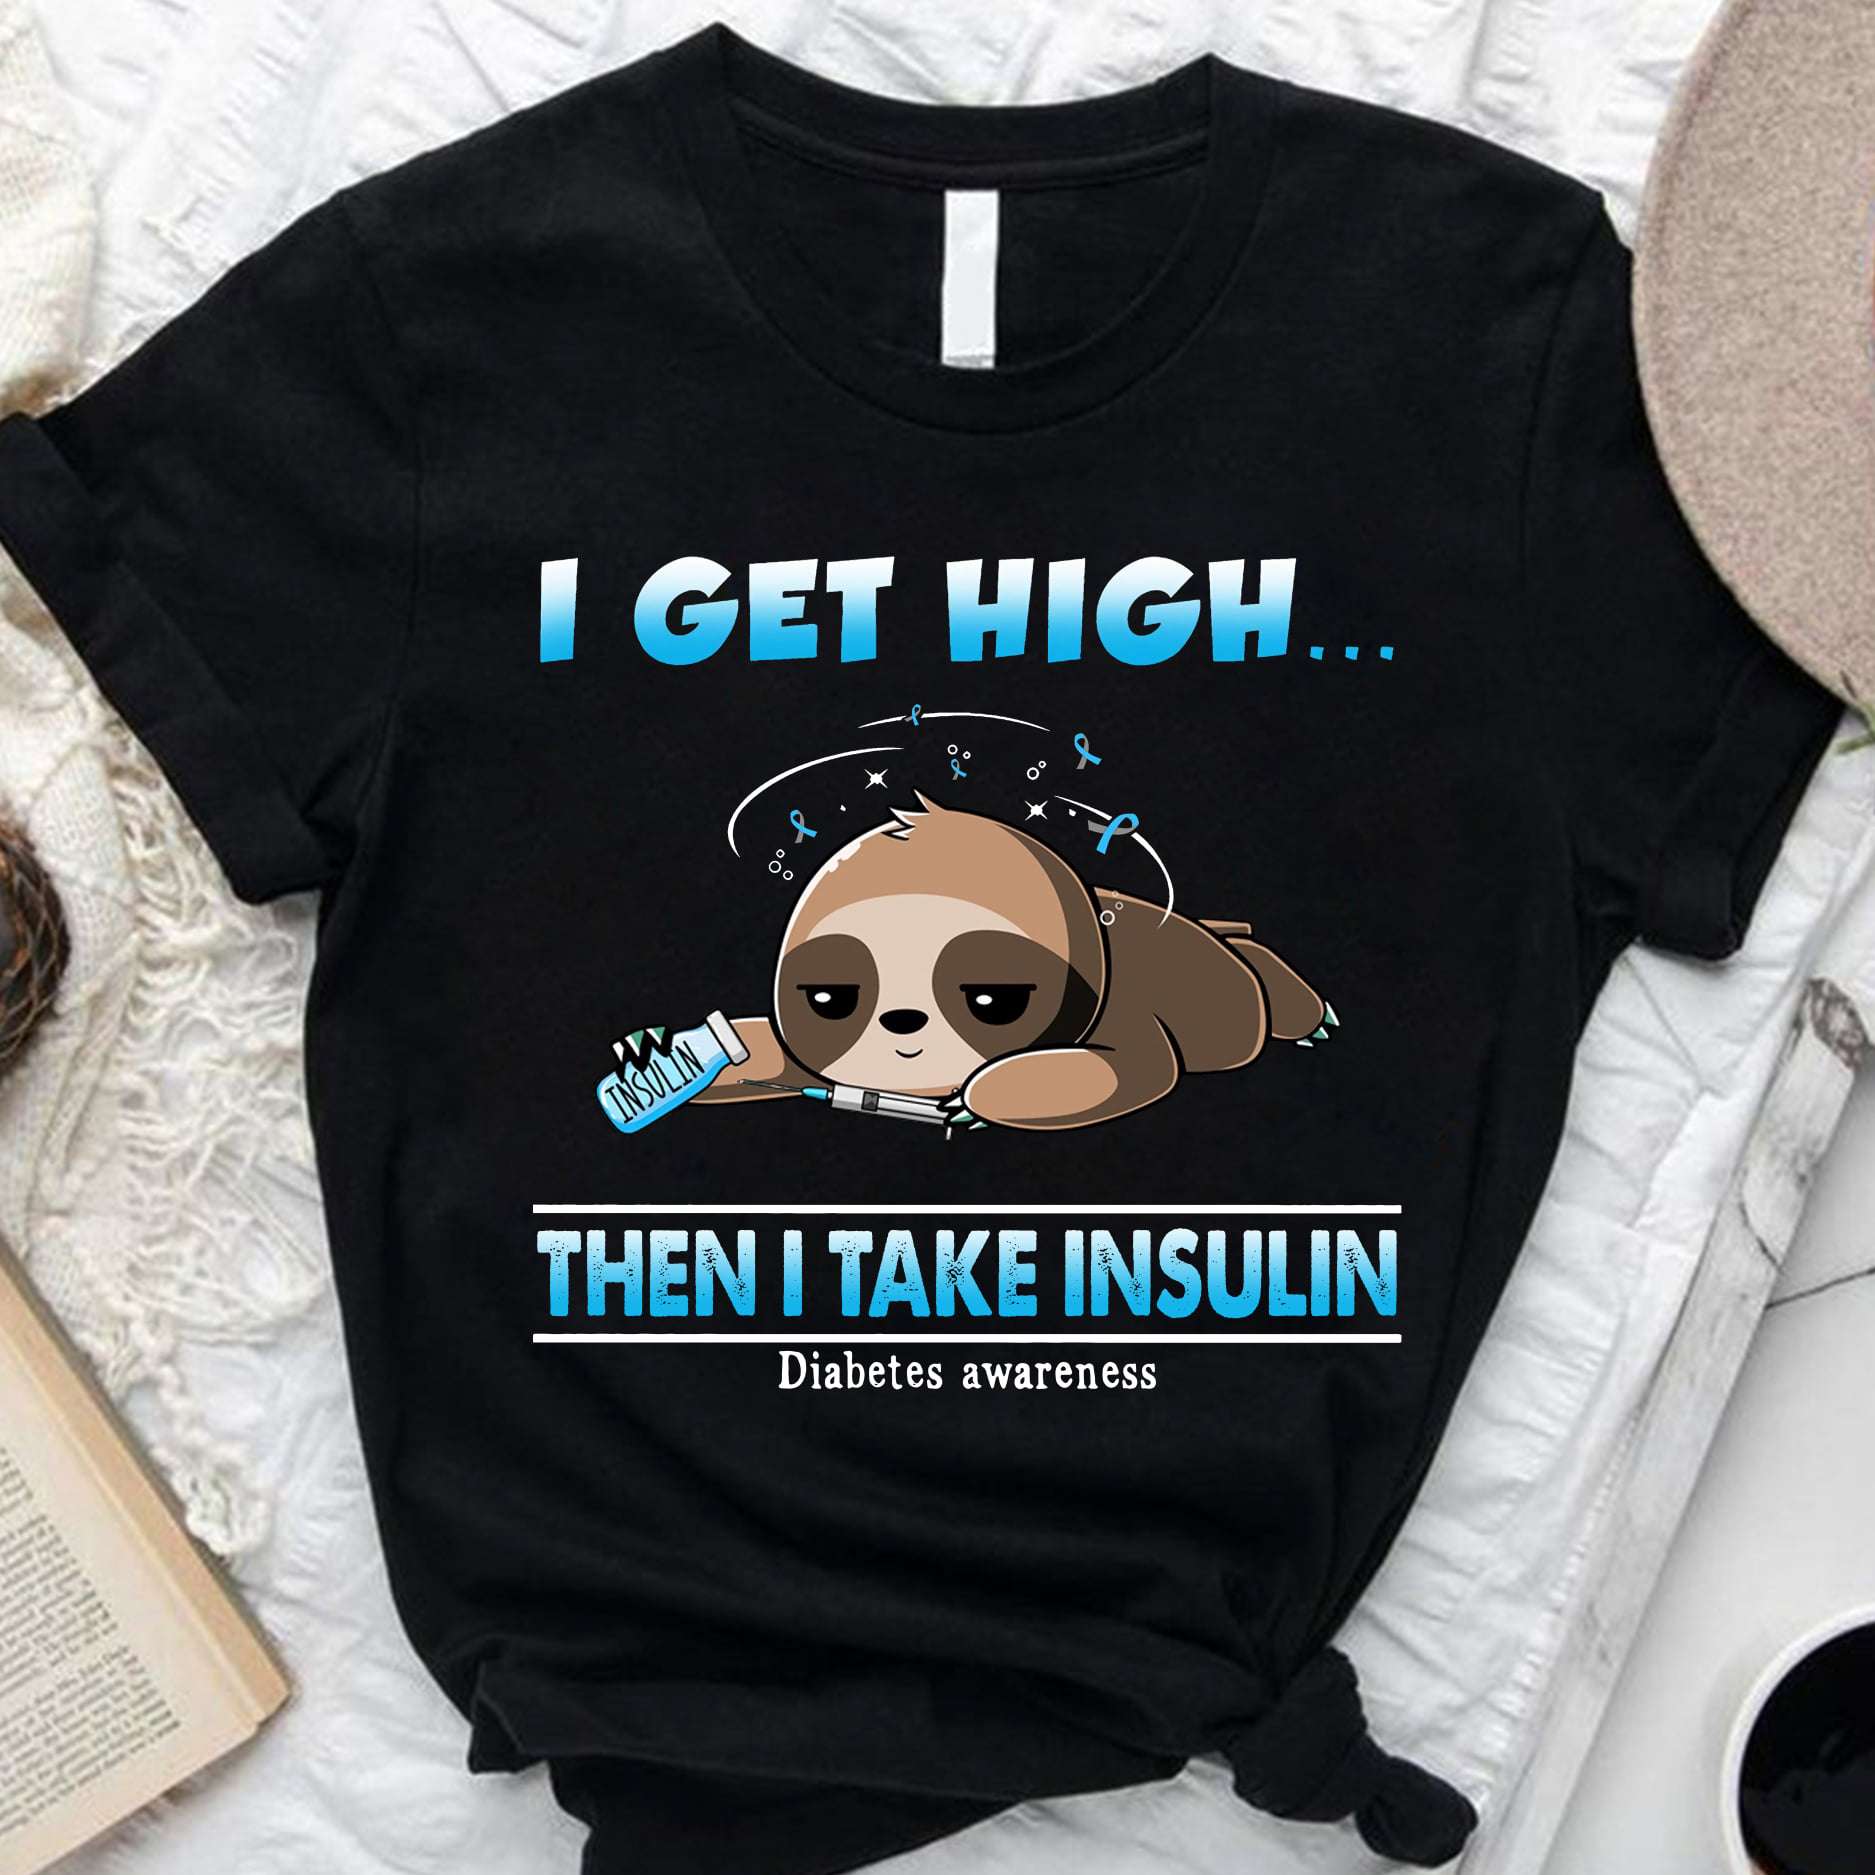 I get high then I take insulin - Diabetes awareness, high sugar level symptoms